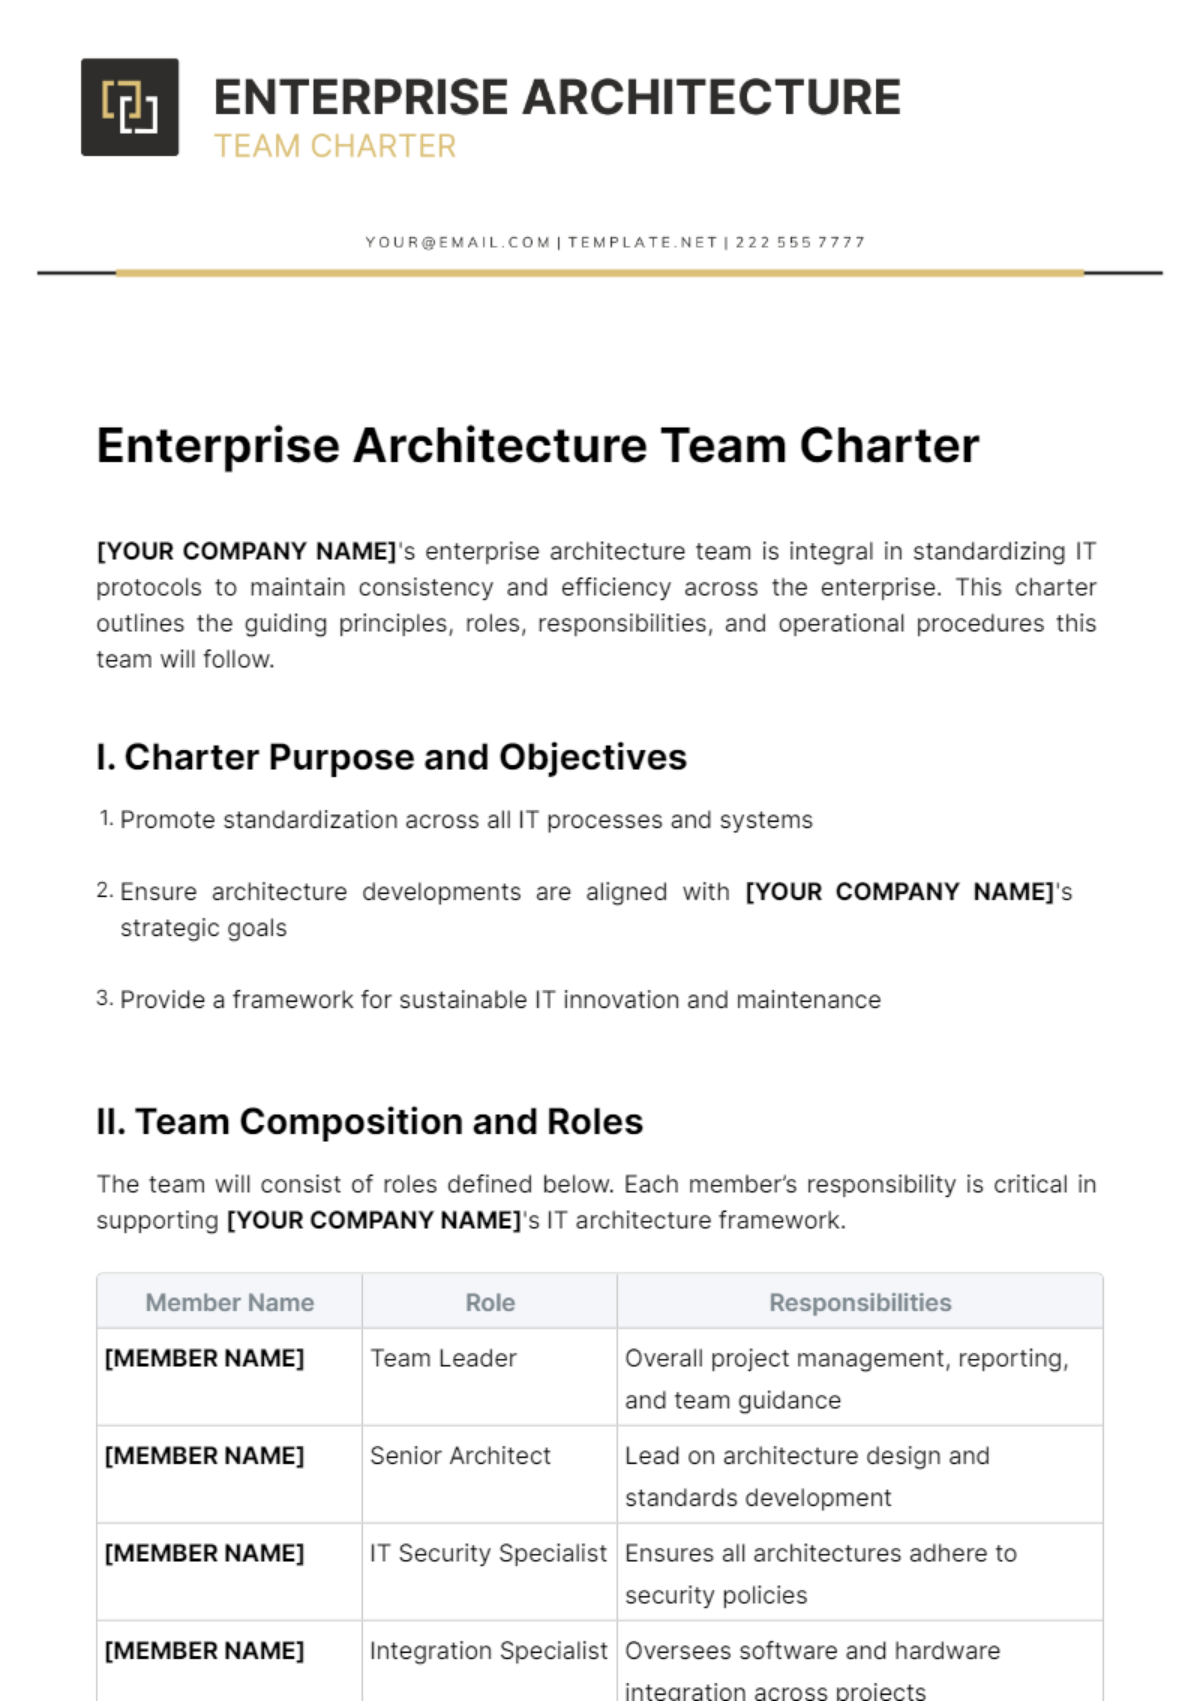 Enterprise Architecture Team Charter Template